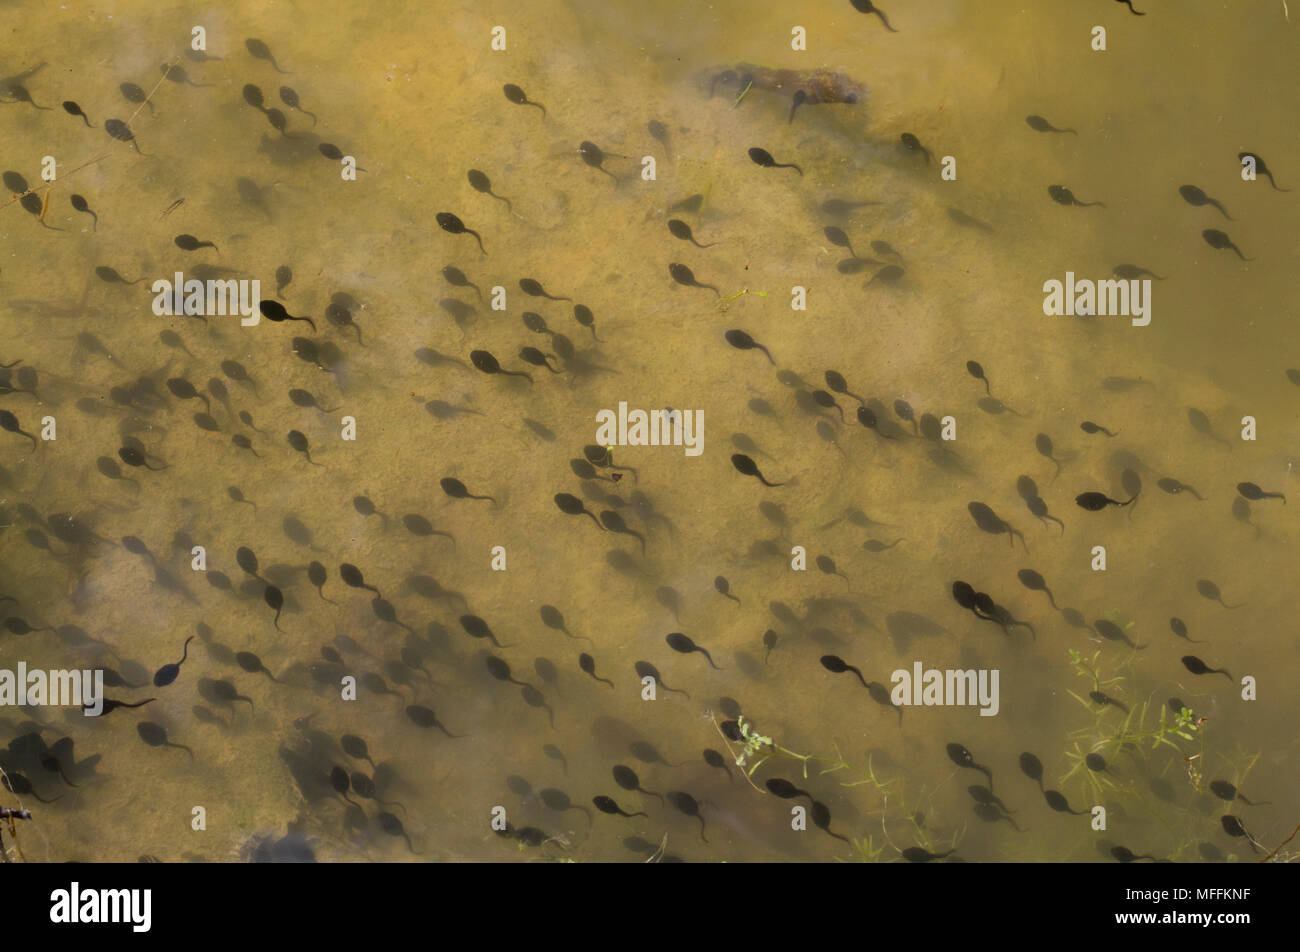 COMMON FROG (Rana temporaria) tadpoles en masse Stock Photo